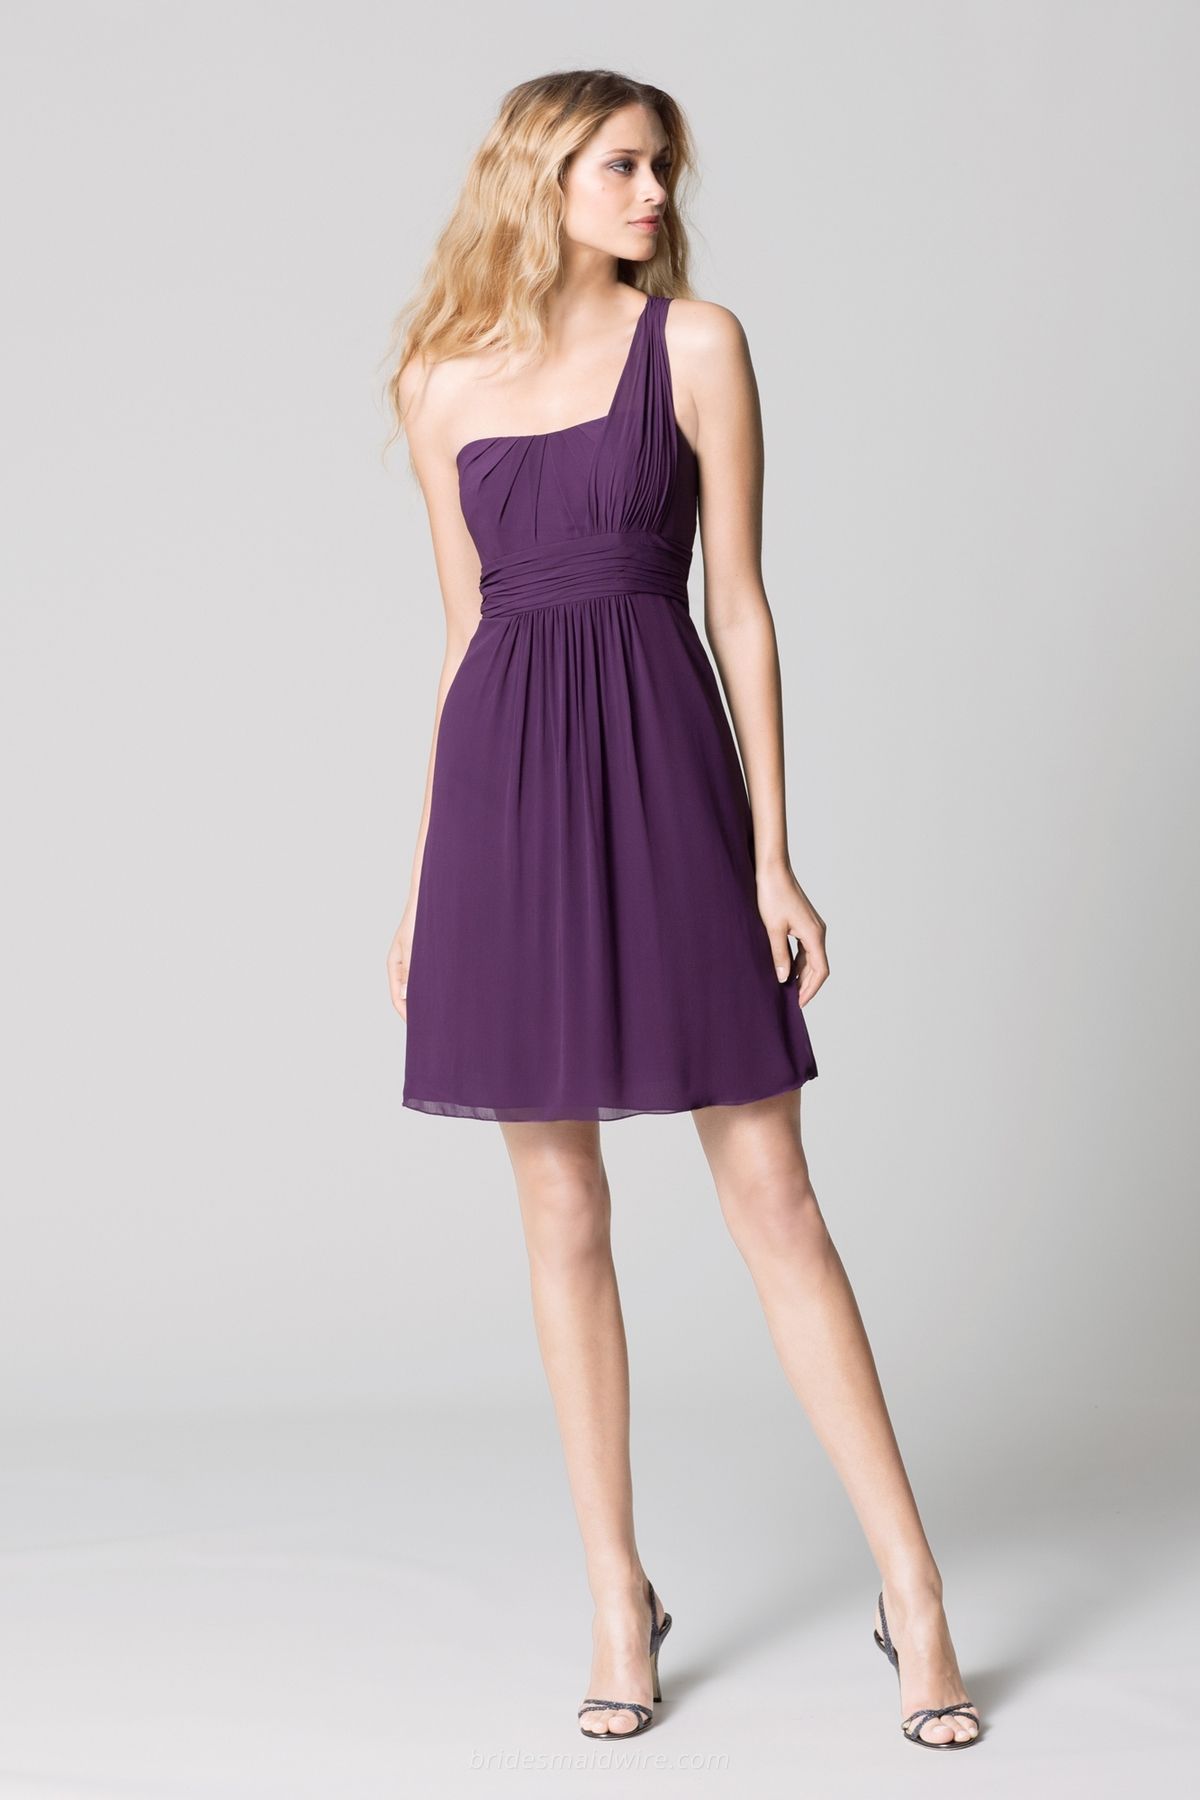 chiffon dark purple bridesmaid dresses knee length